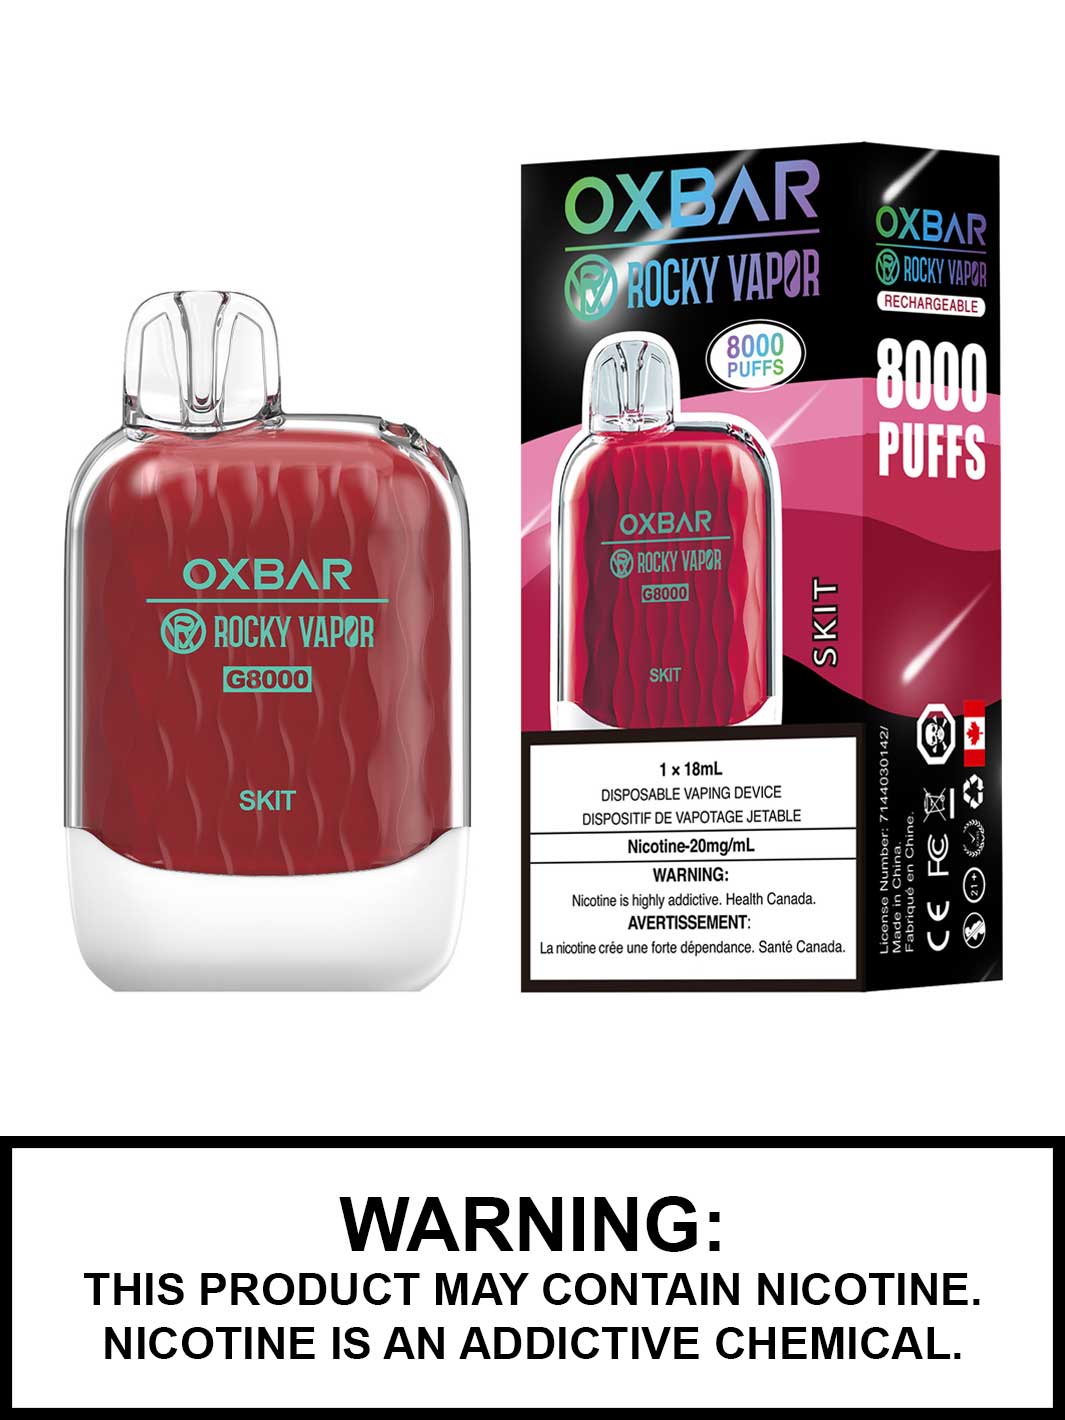 Skit Oxbar Disposable Vape, Oxbar G8000 Vape, Oxbar x Rocky Vapor, Vape360 Canada